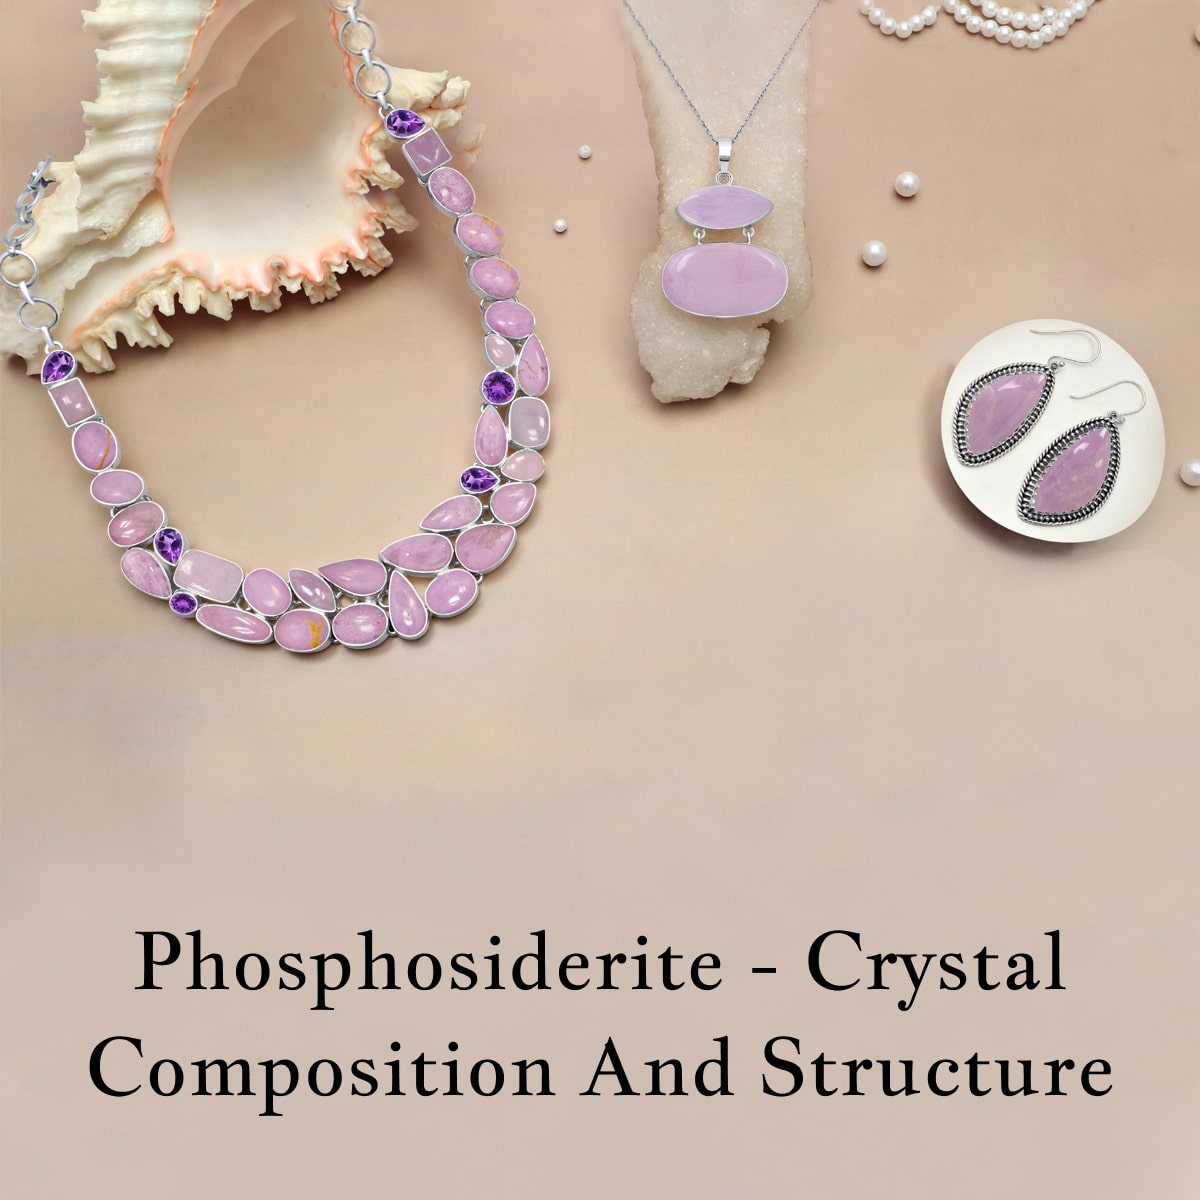 Physical Properties of Phosphosiderite Crystal